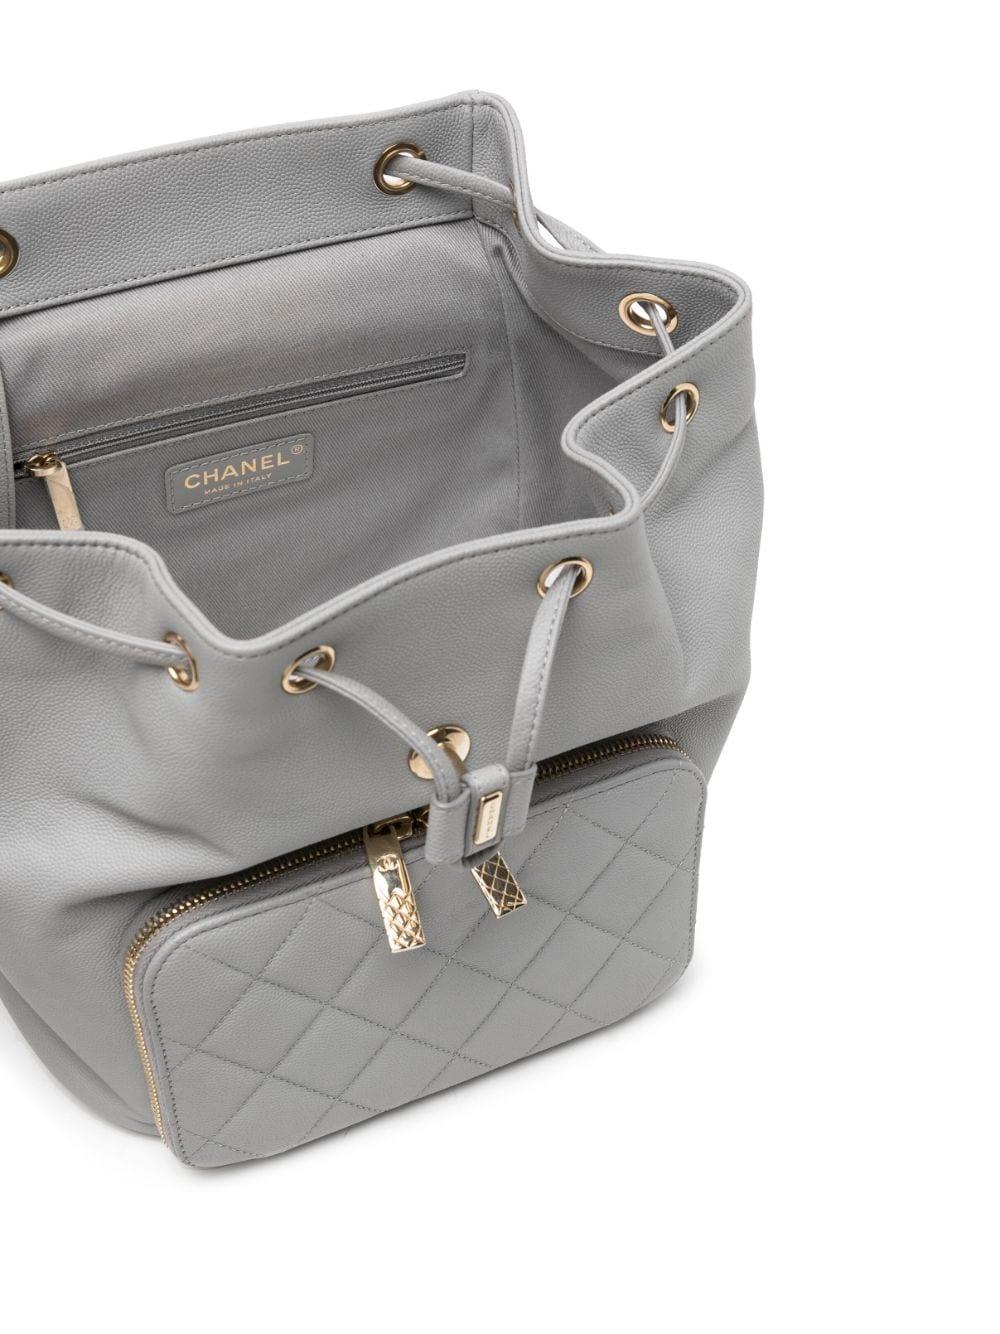 chanel backpack grey